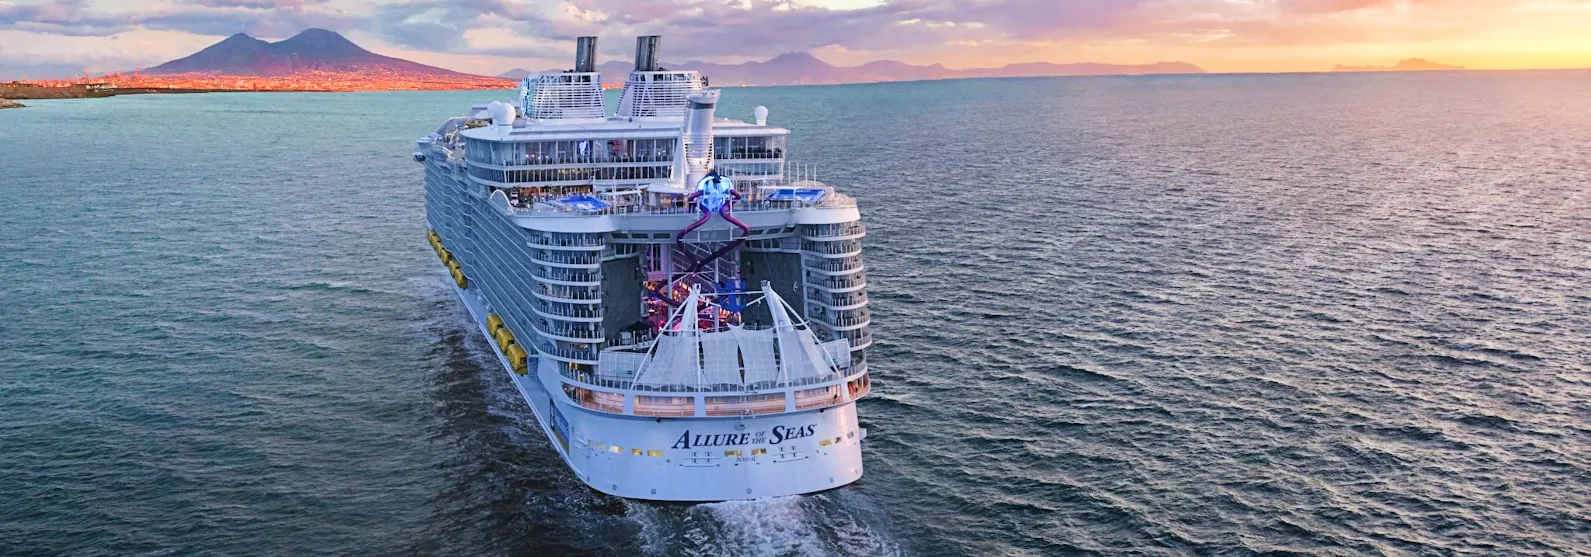 Allure of the Seas - Royal Caribbean